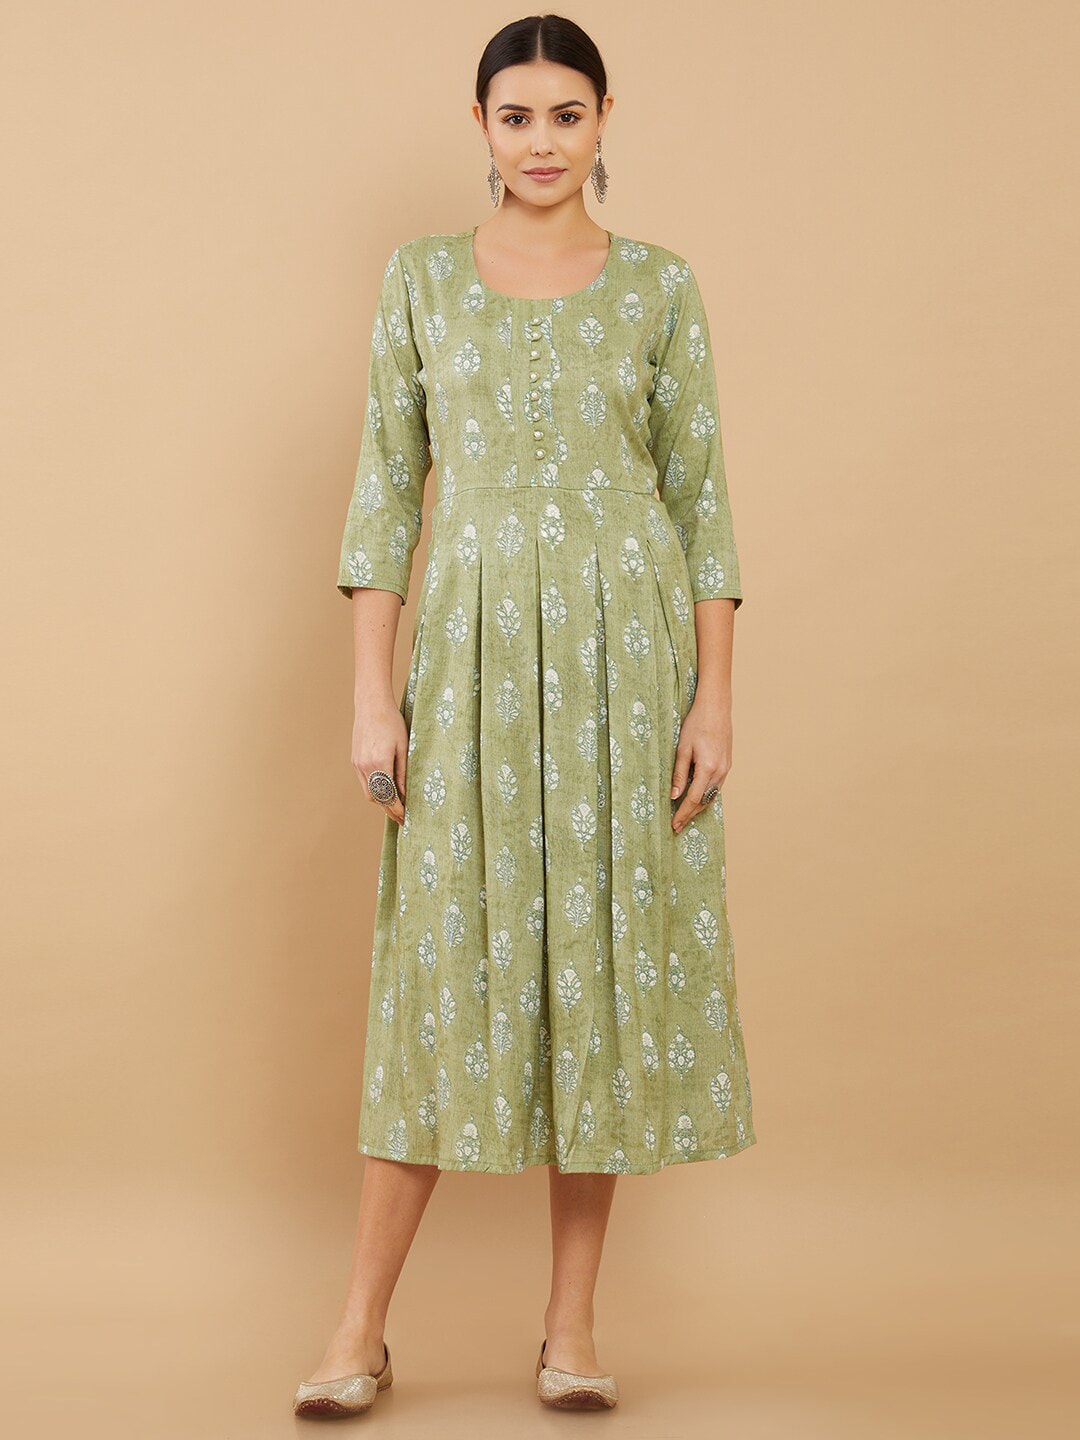 Soch Olive Green & White Floral Midi Dress Price in India